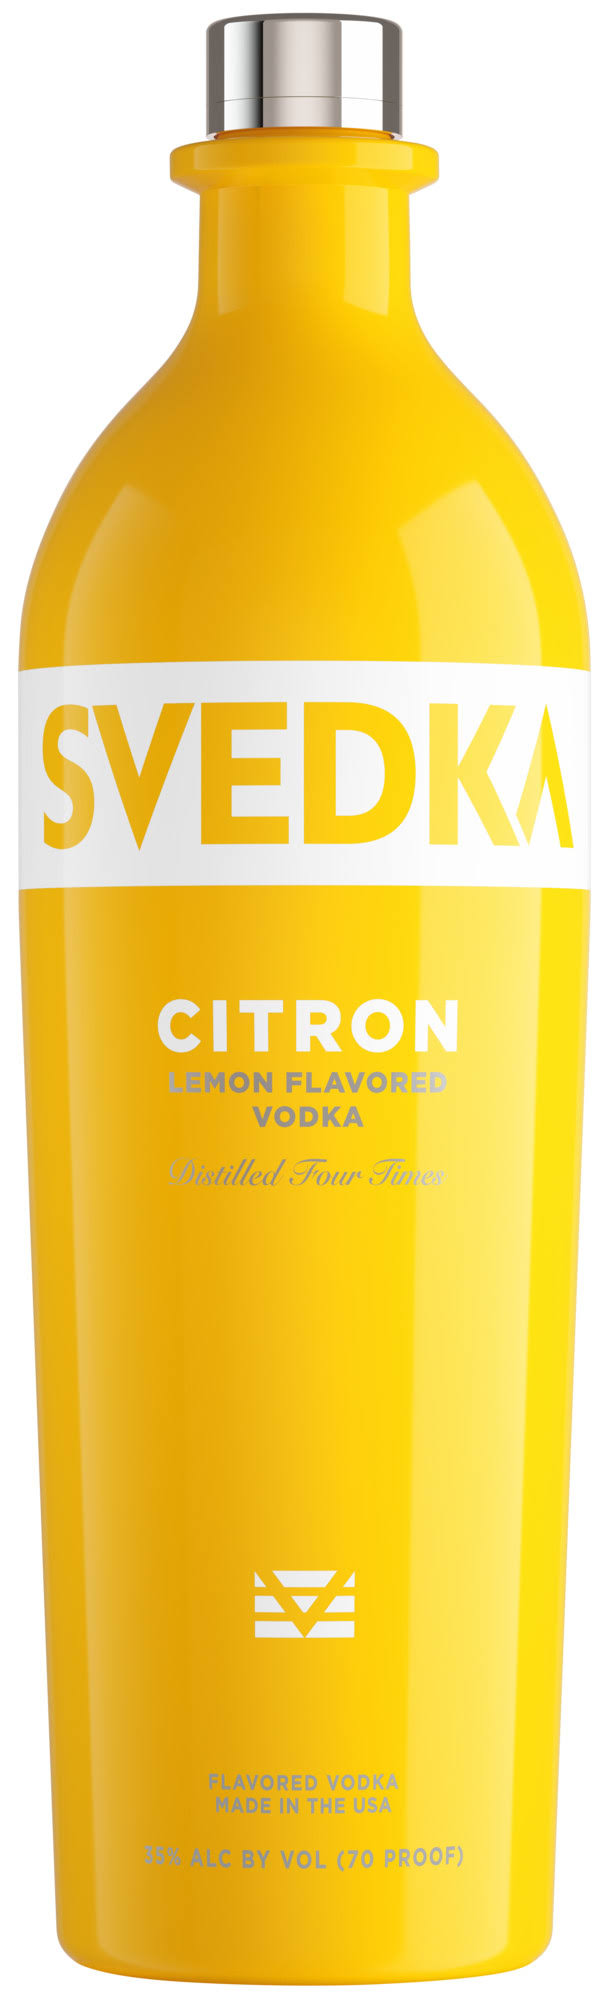 Svedka Vodka Citron - 1l